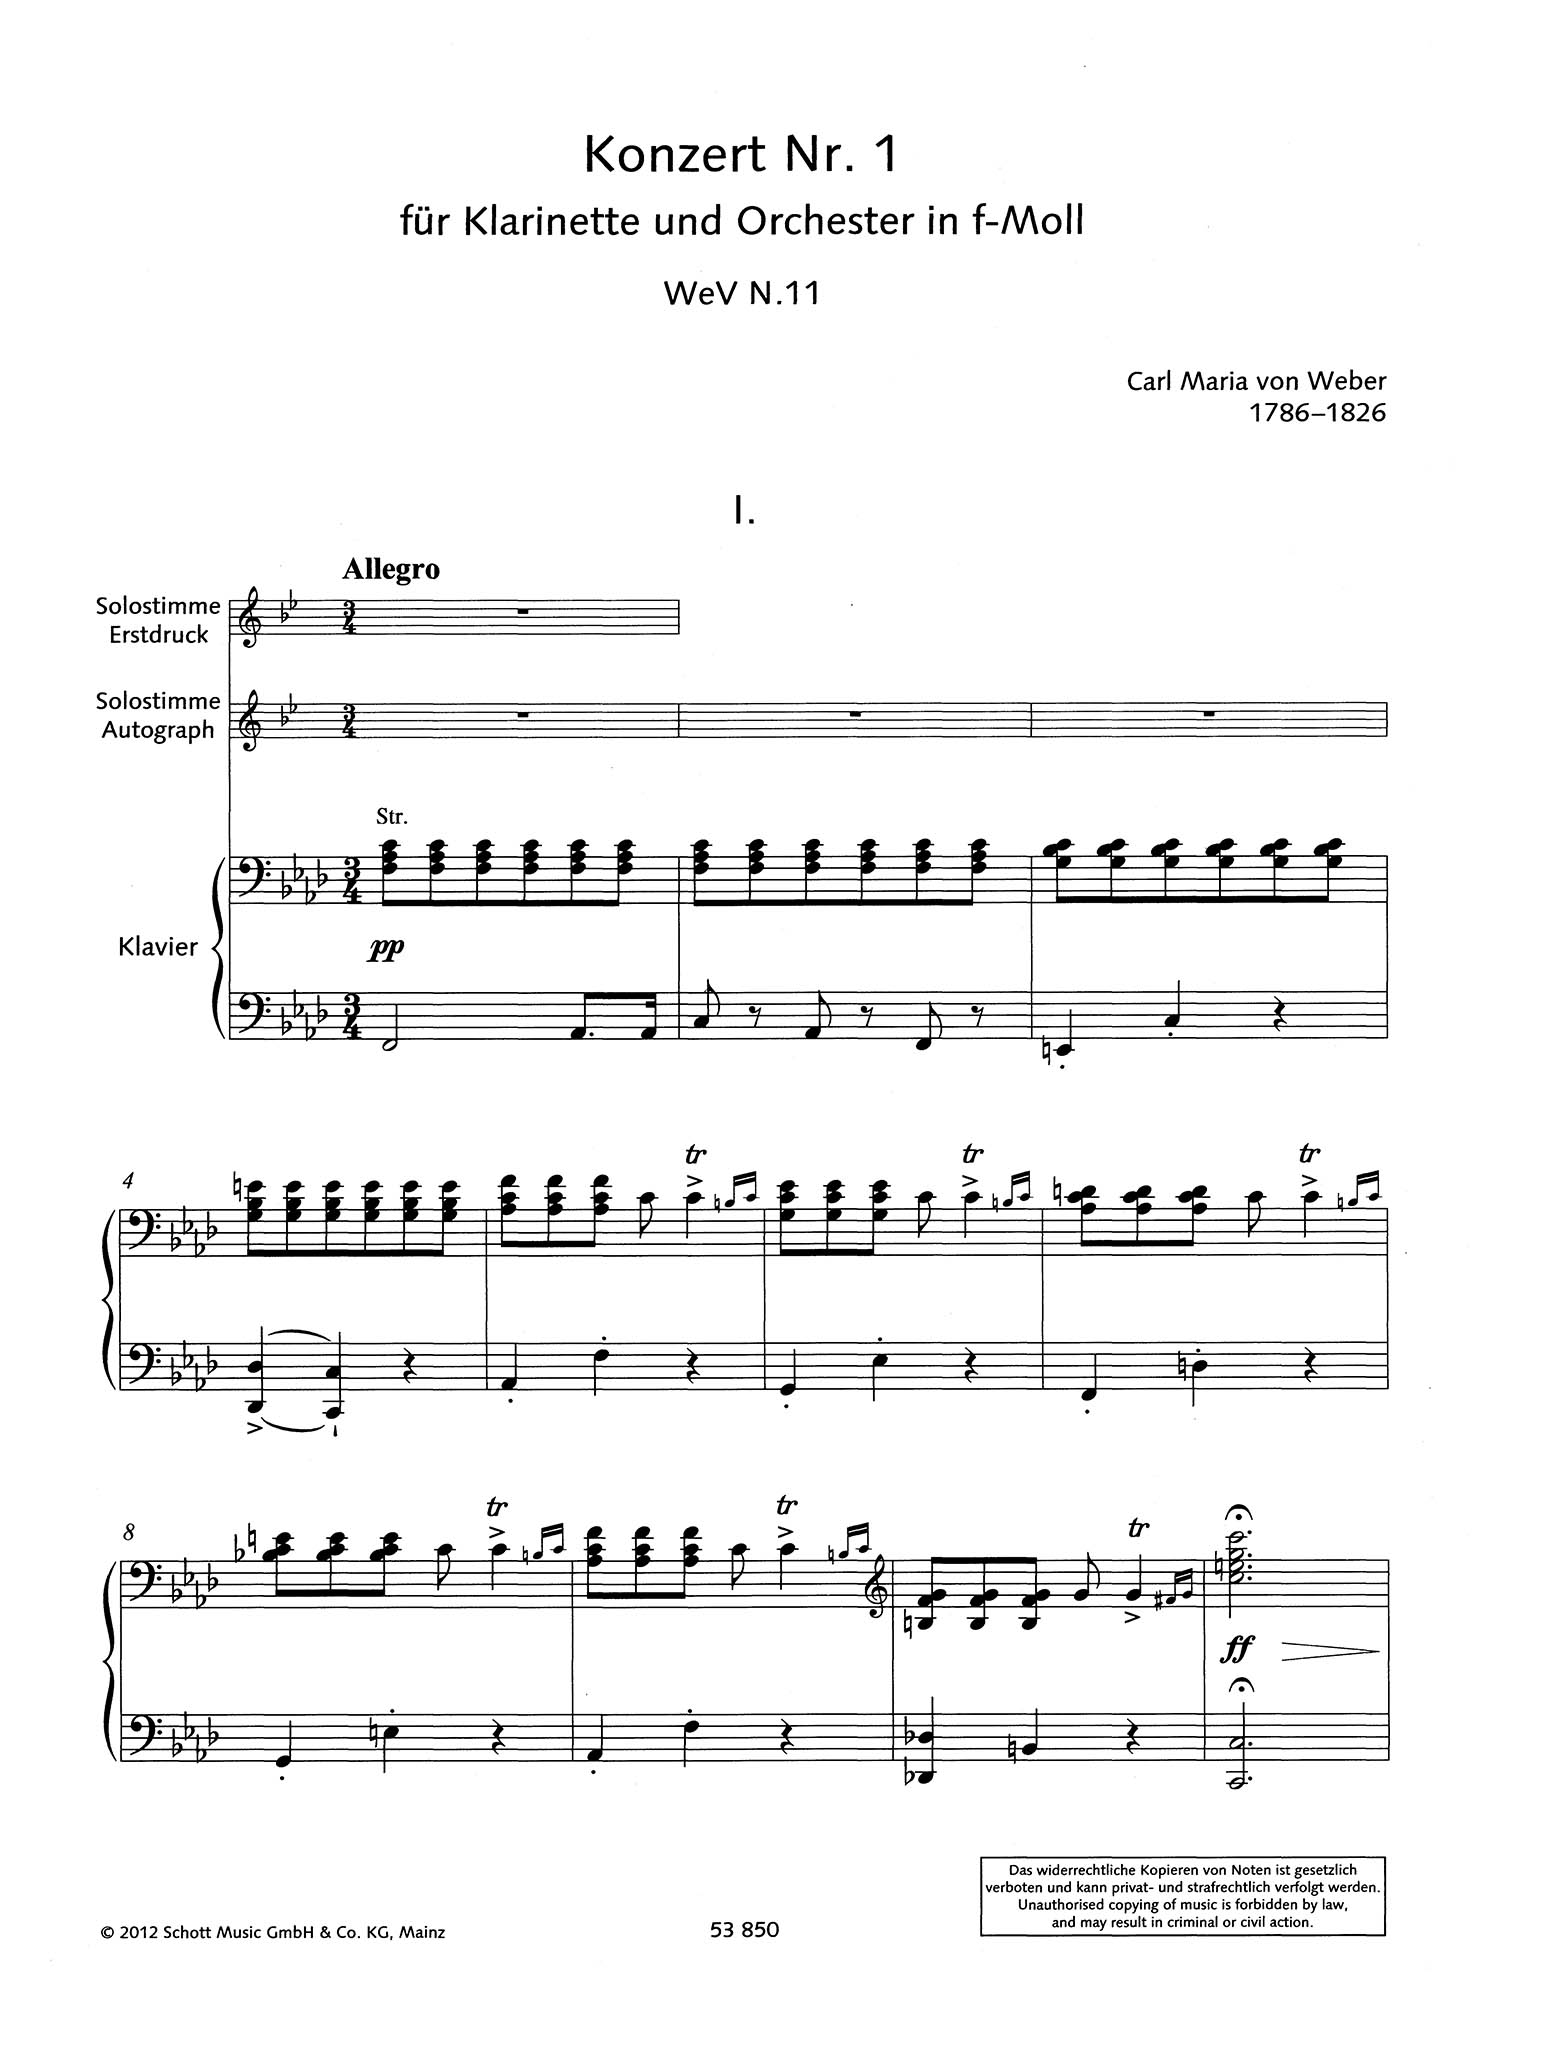 Clarinet Concerto No. 1 in F Minor, Op. 73 - Movement 1